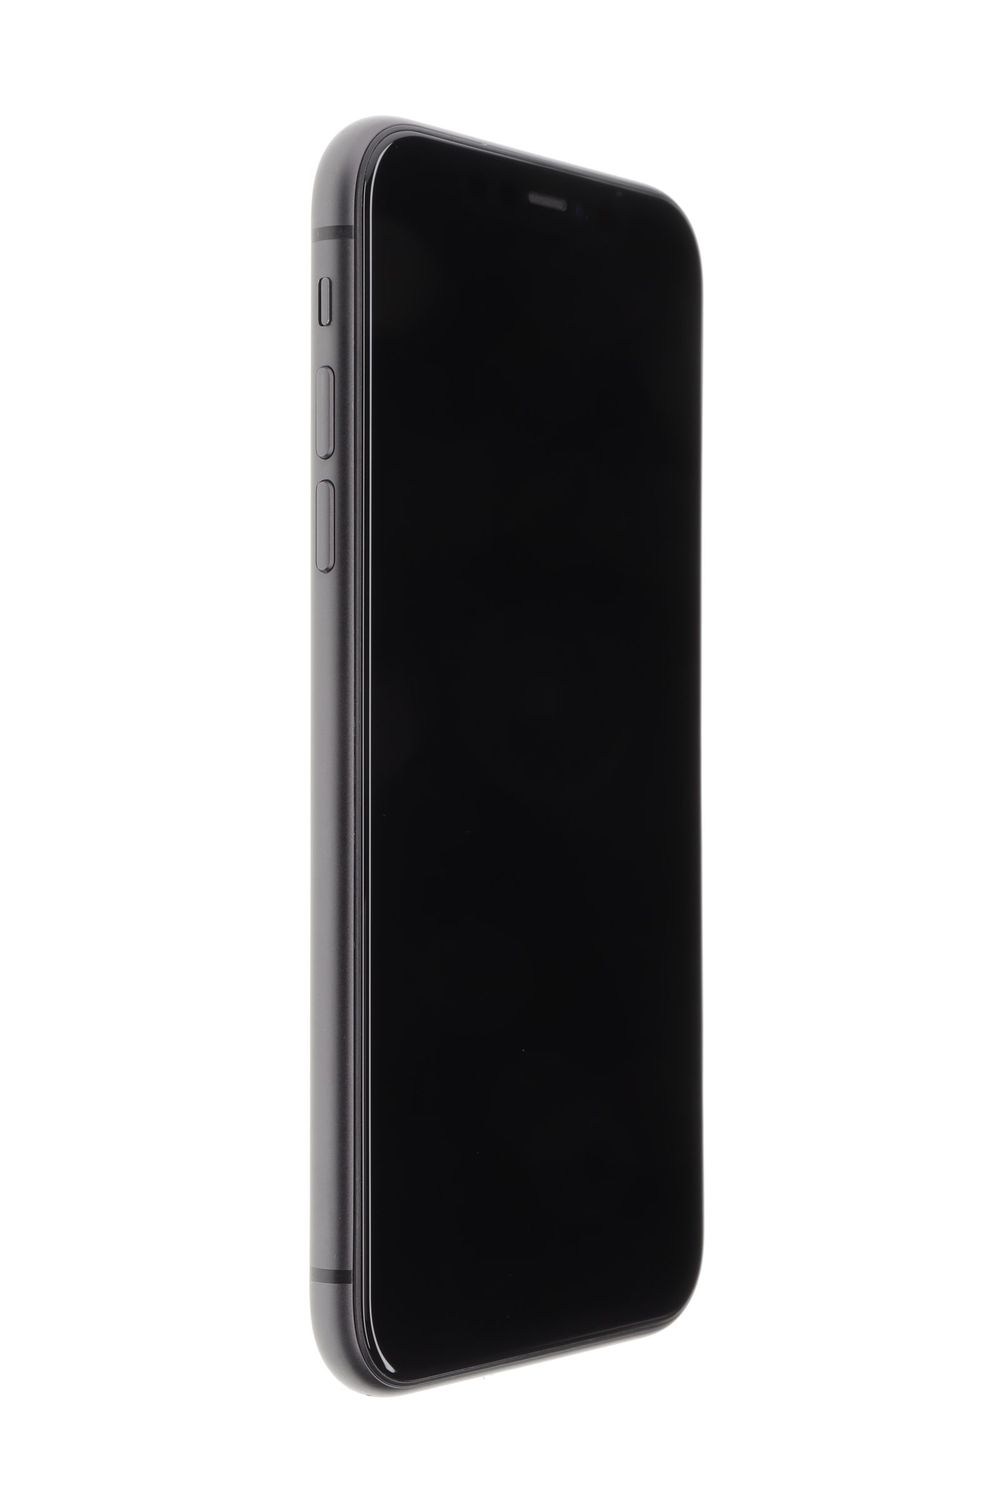 Mobiltelefon Apple iPhone 11, Black, 128 GB, Foarte Bun